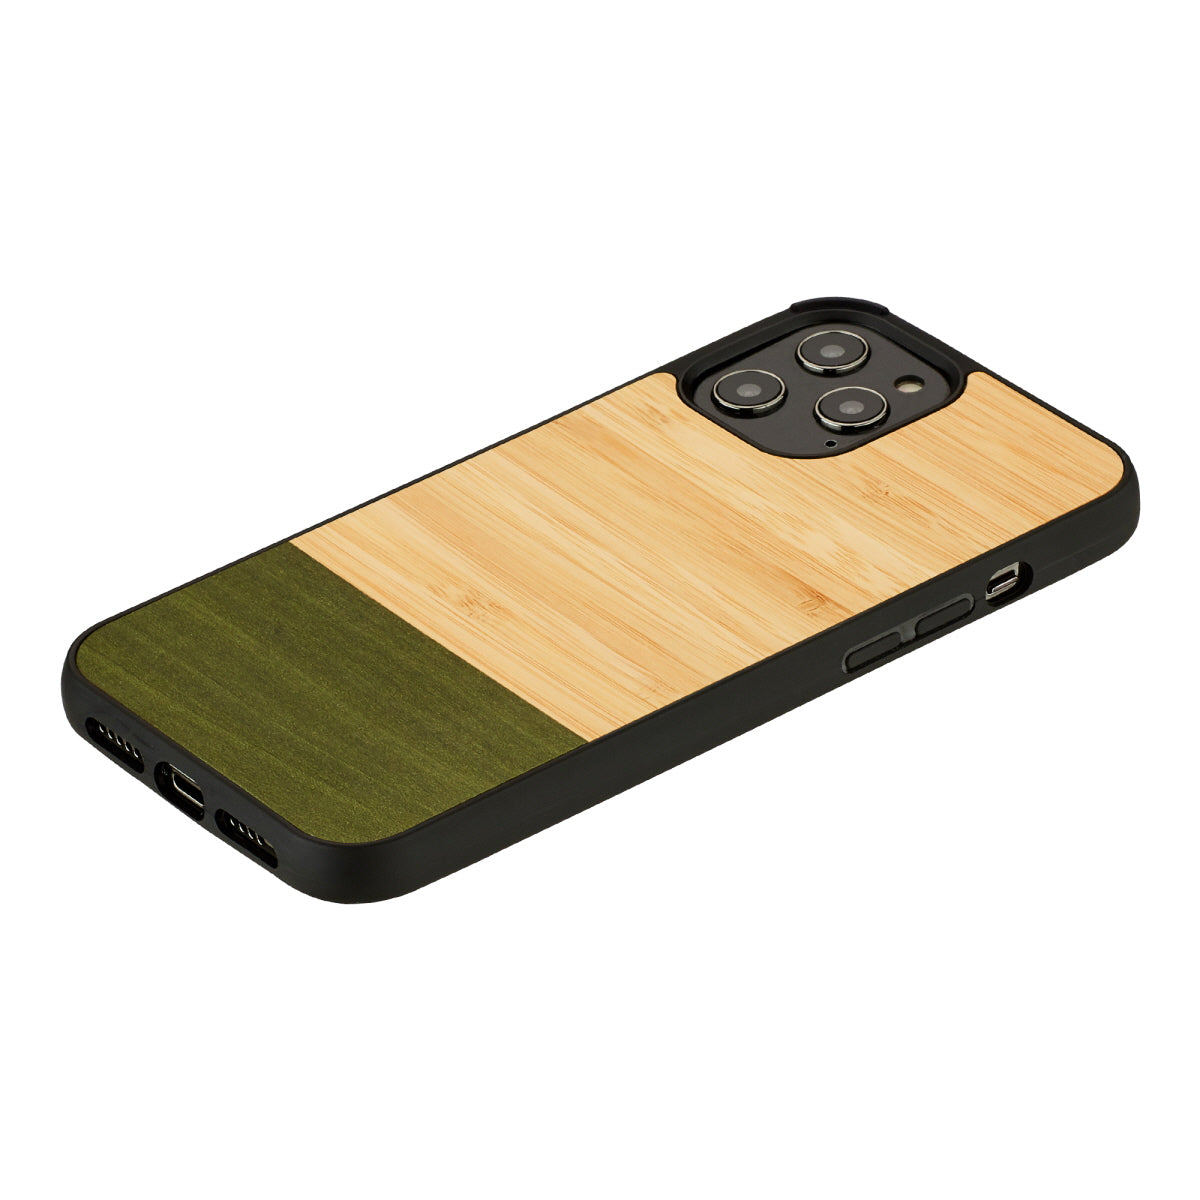 Vāciņš iPhone 12 Pro Max melns bambusa, MAN&WOOD